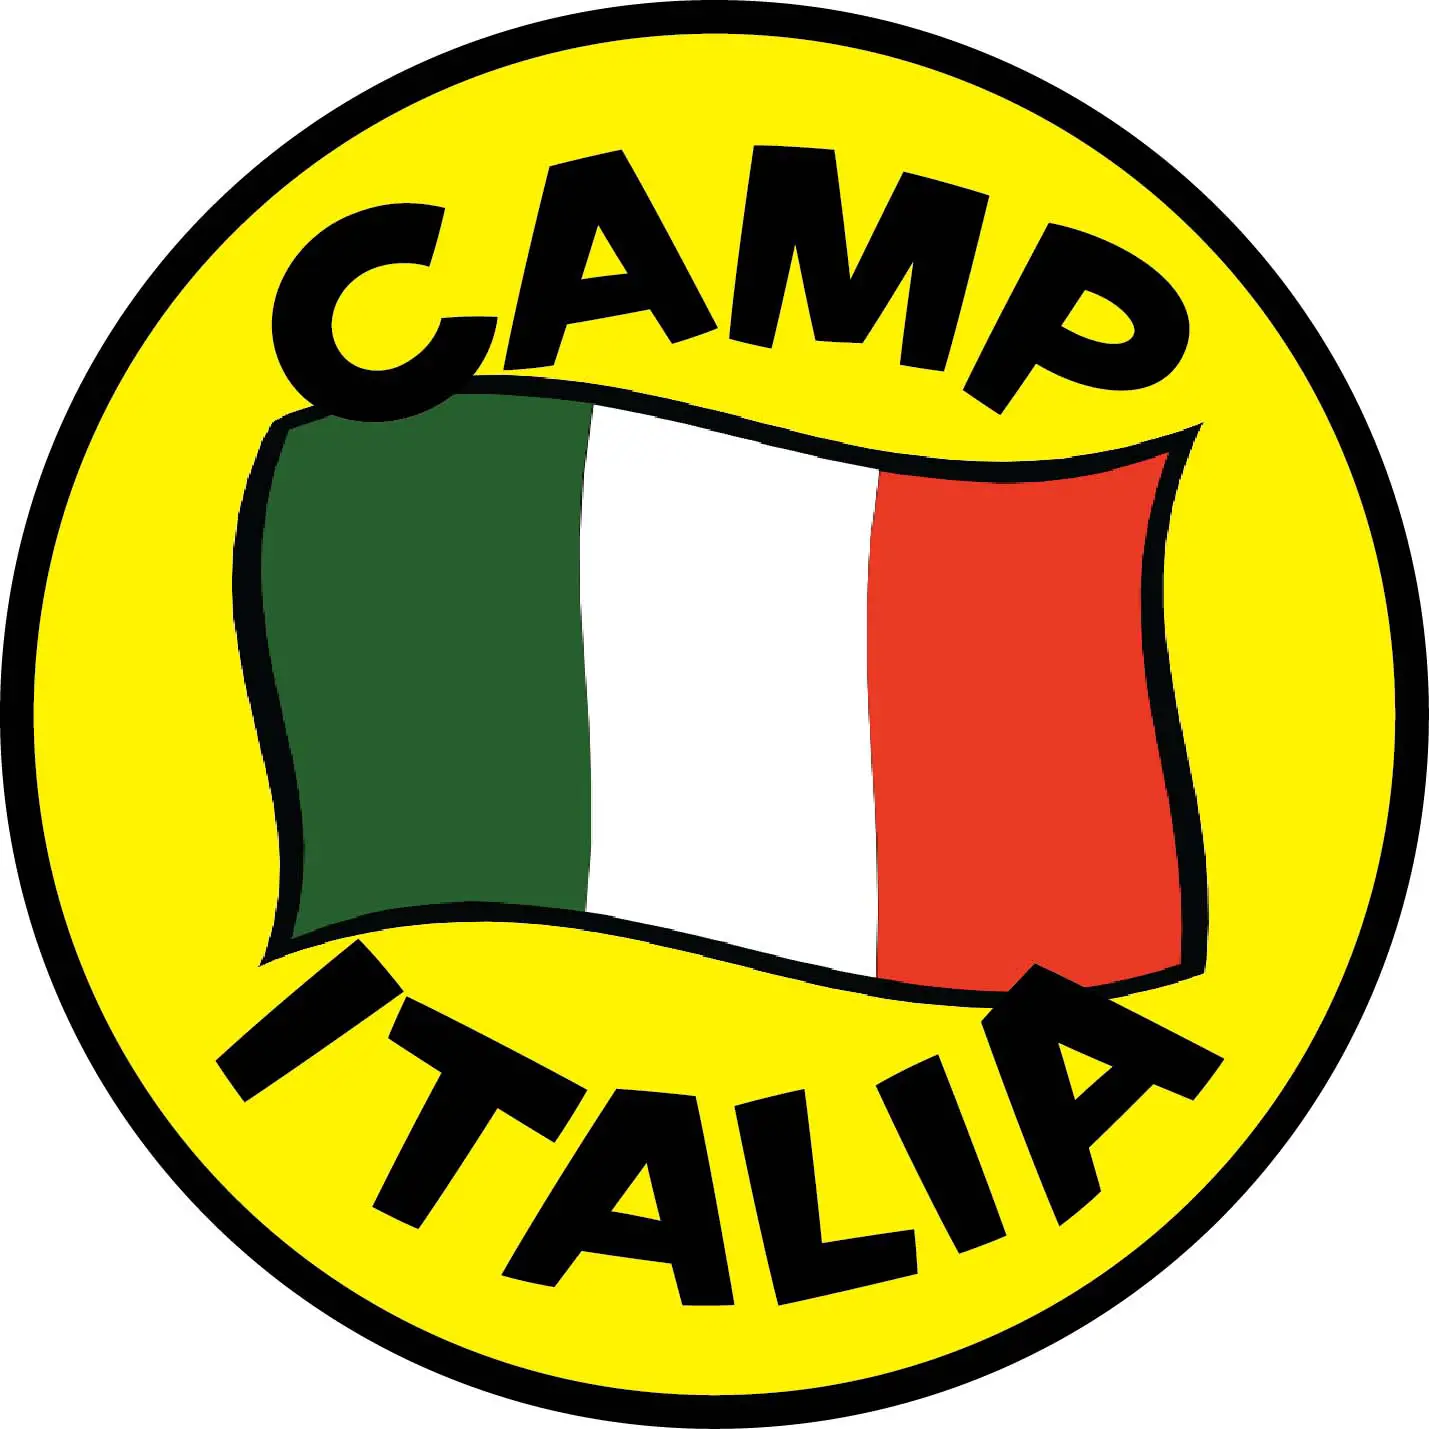 Camp Italia USA teaches kids Italian culture in Long Island